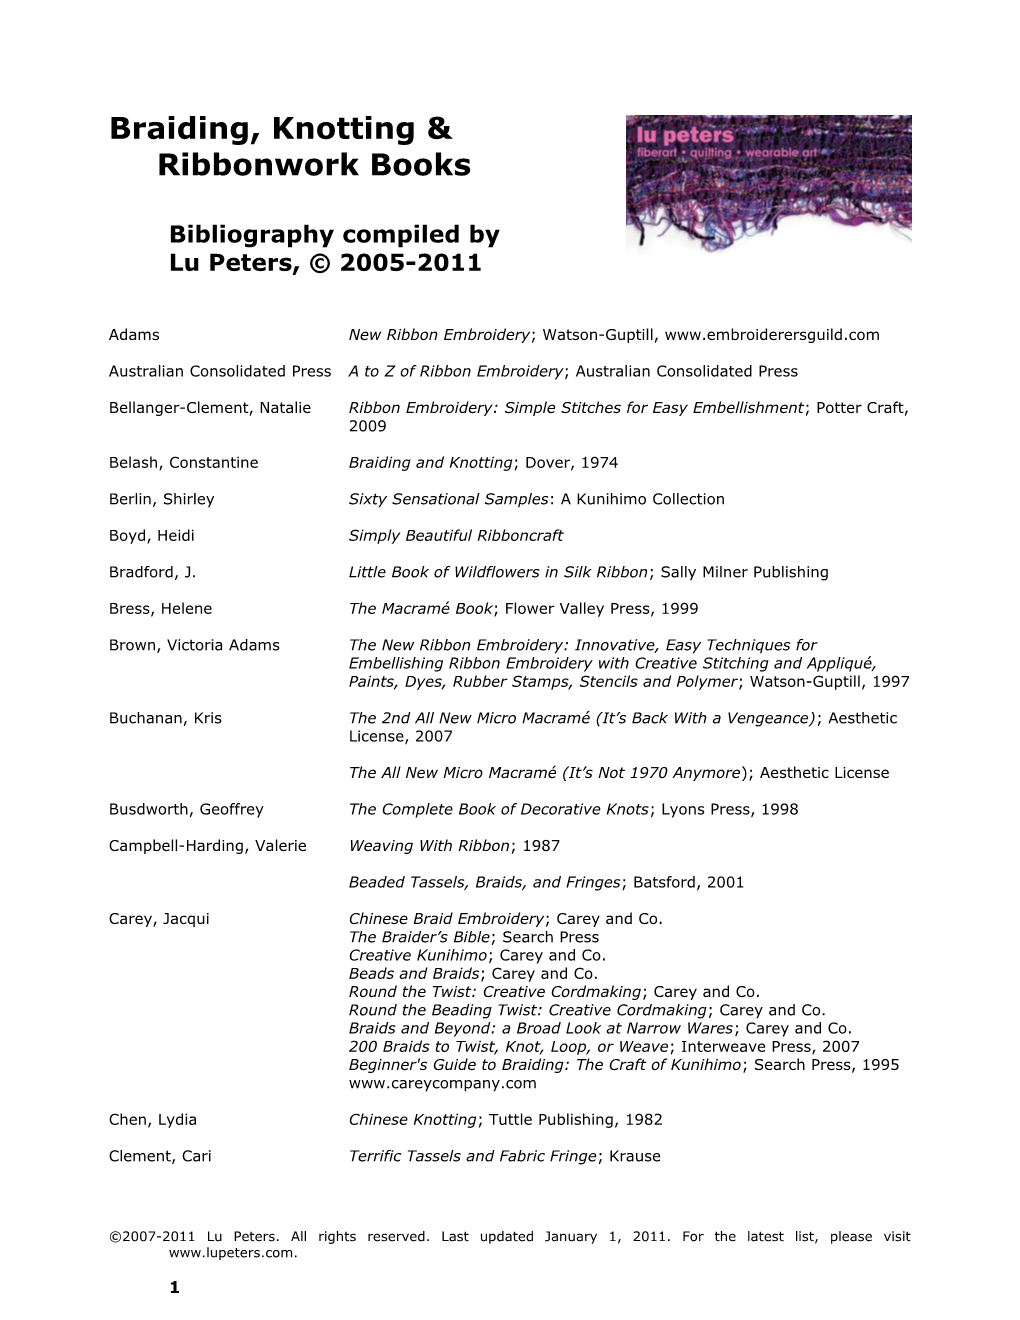 Braiding, Knotting & Ribbonwork Books